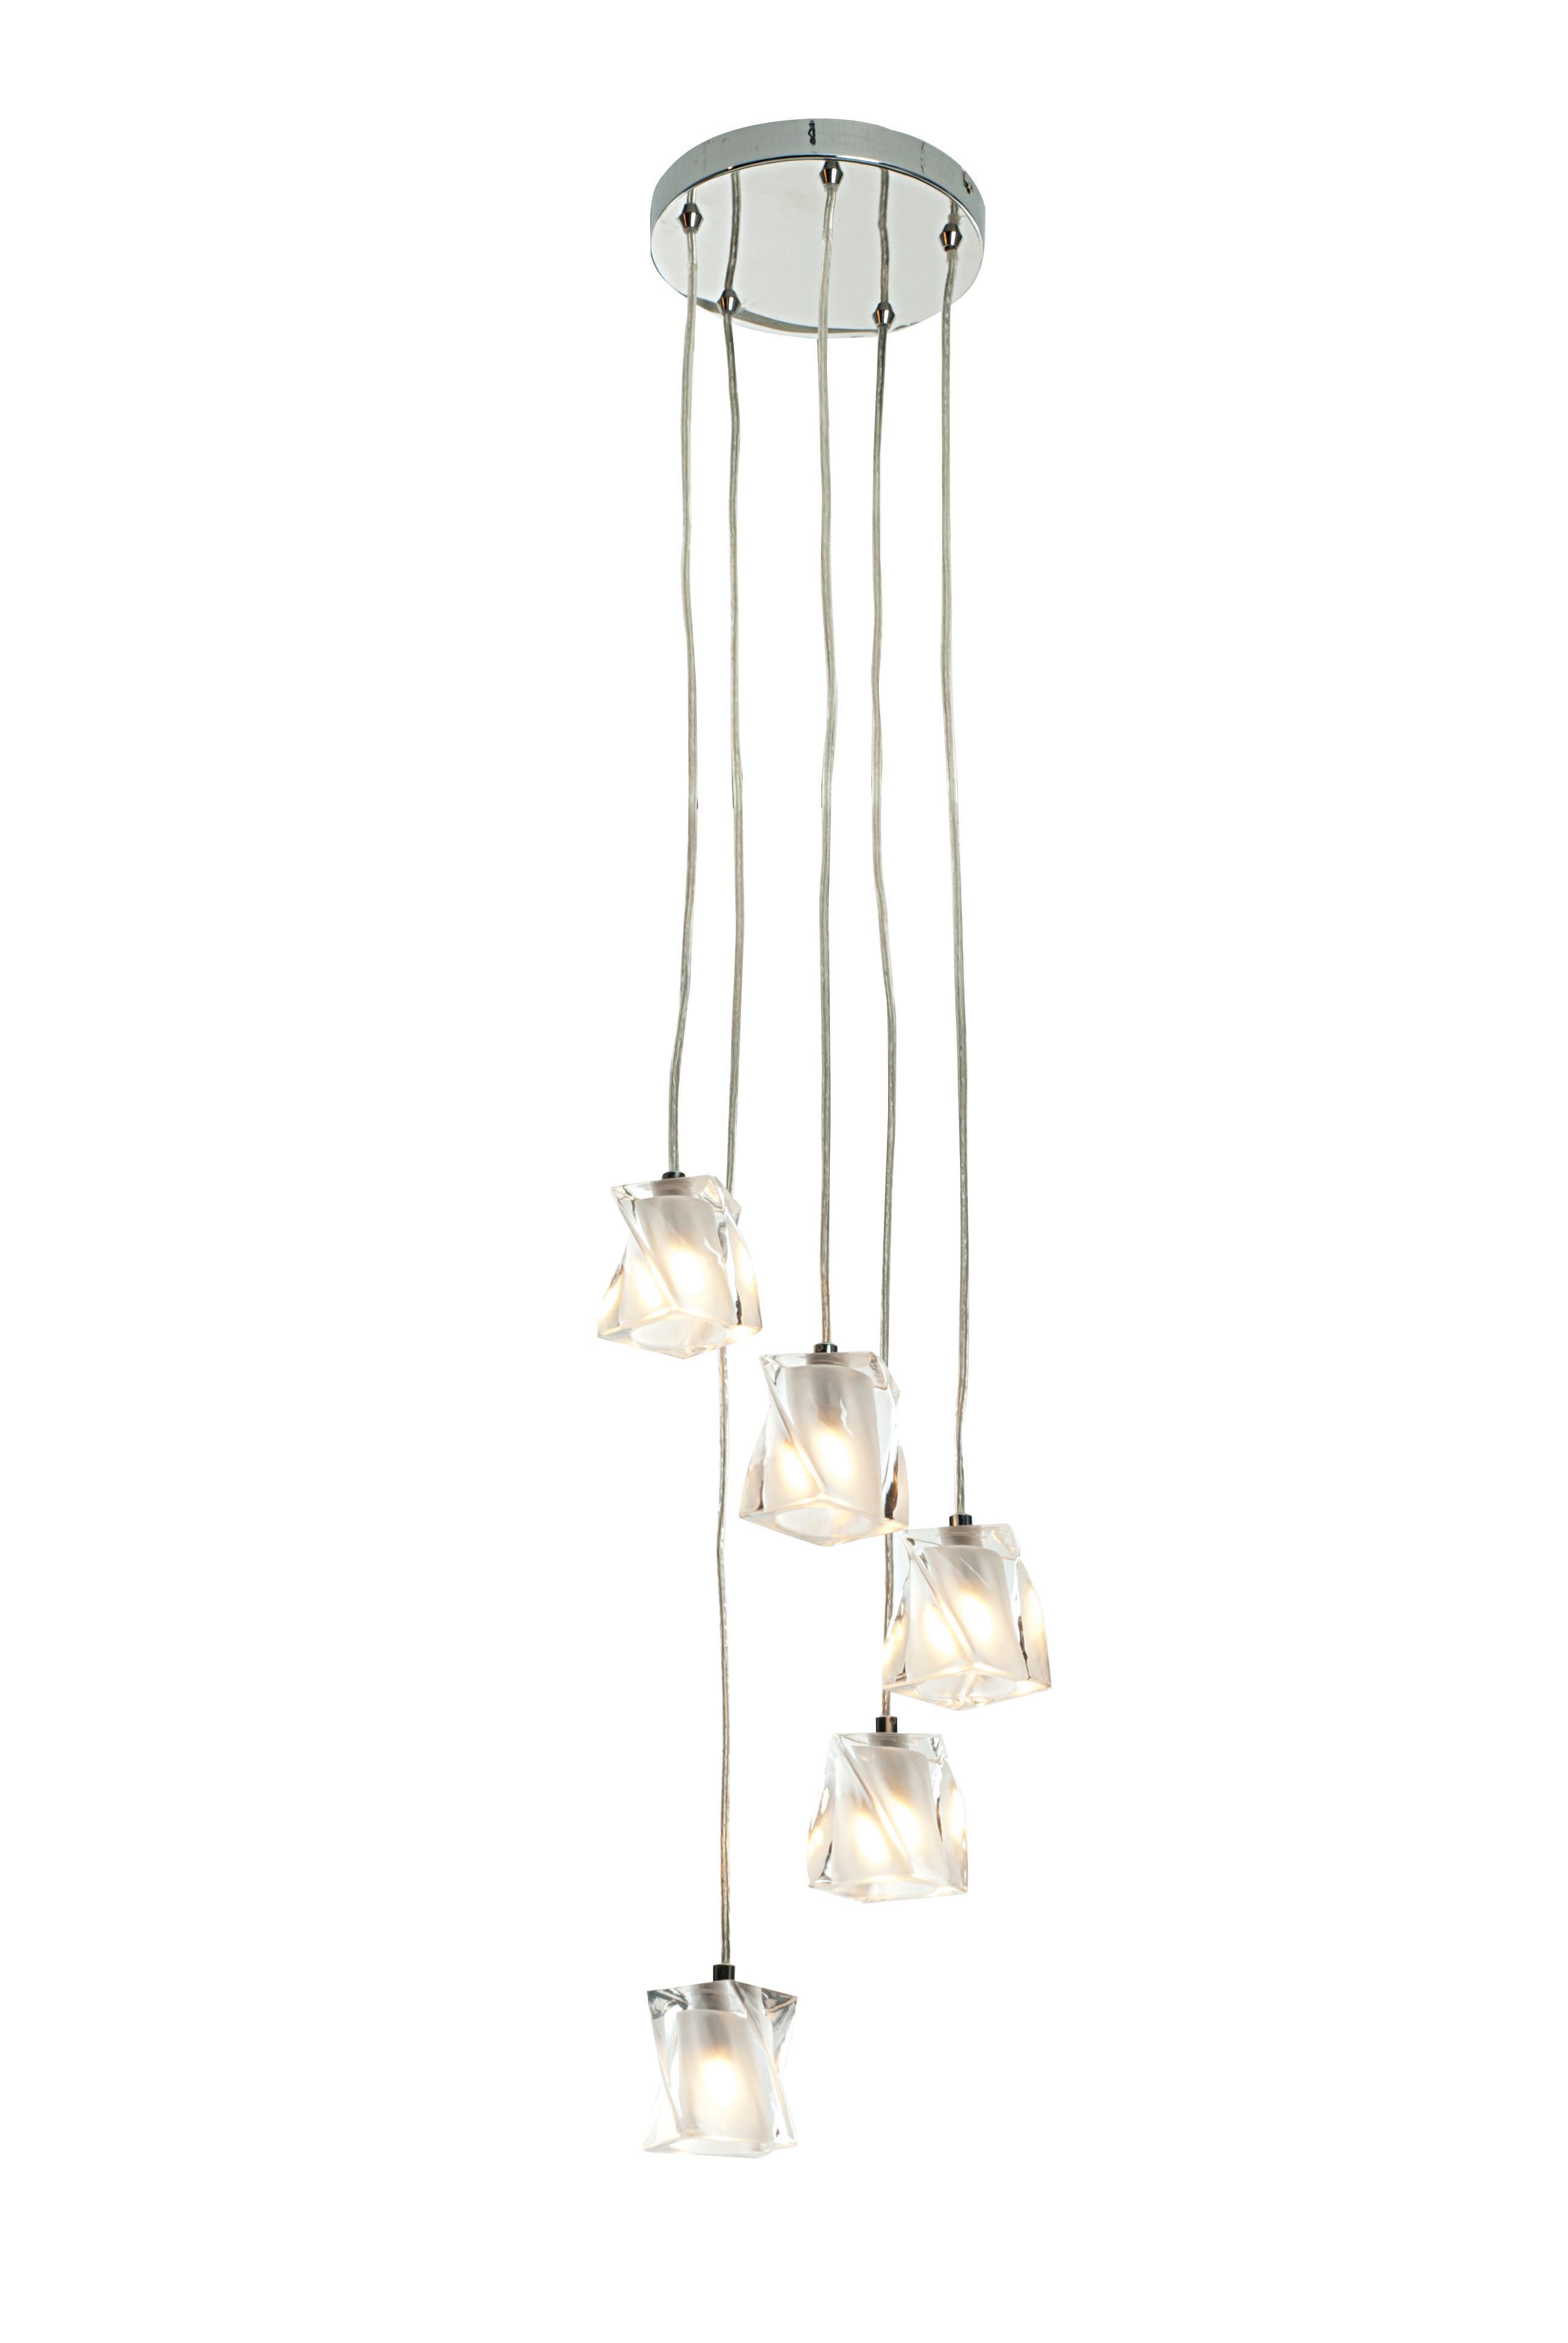 Borrello Silver effect 5 Lamp Pendant Ceiling light